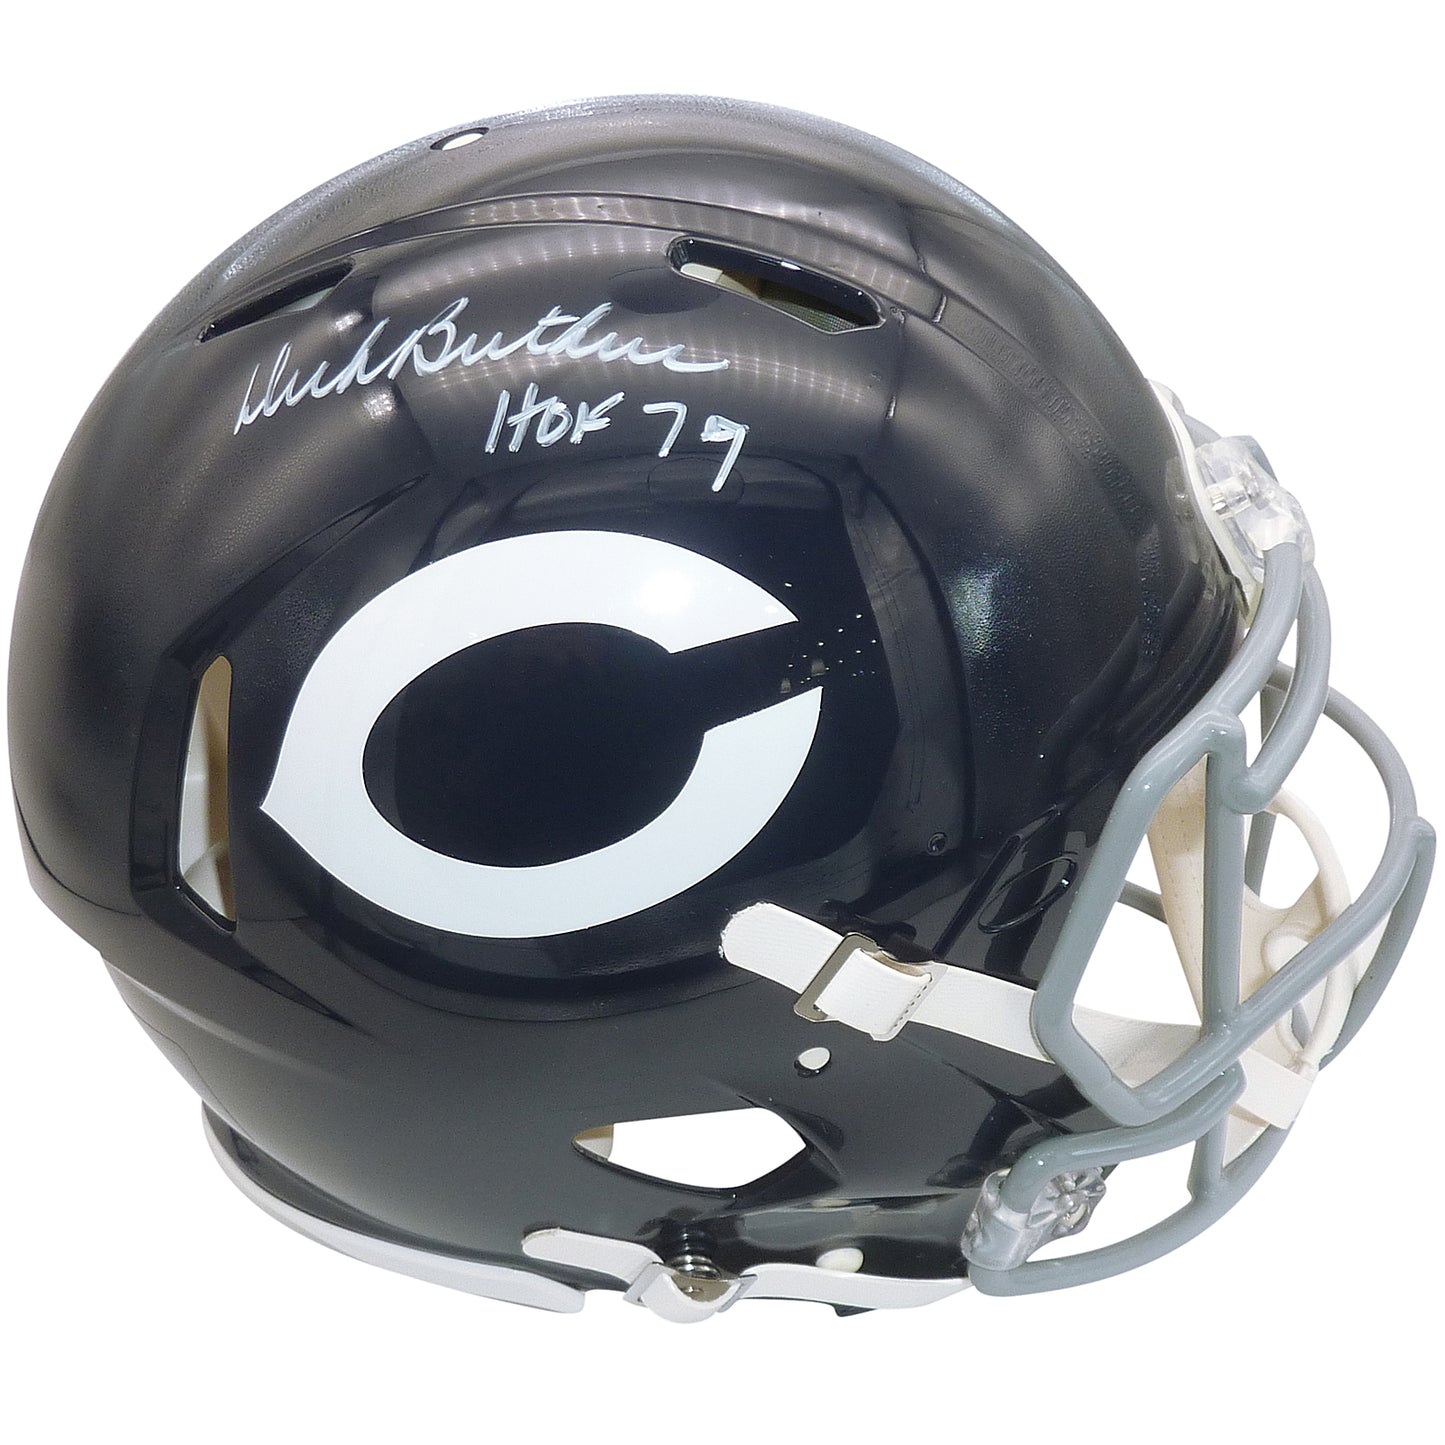 Dick Butkus Autographed Chicago Bears (Throwback) Authentic Proline Helmet w/ "HOF 79" - JSA